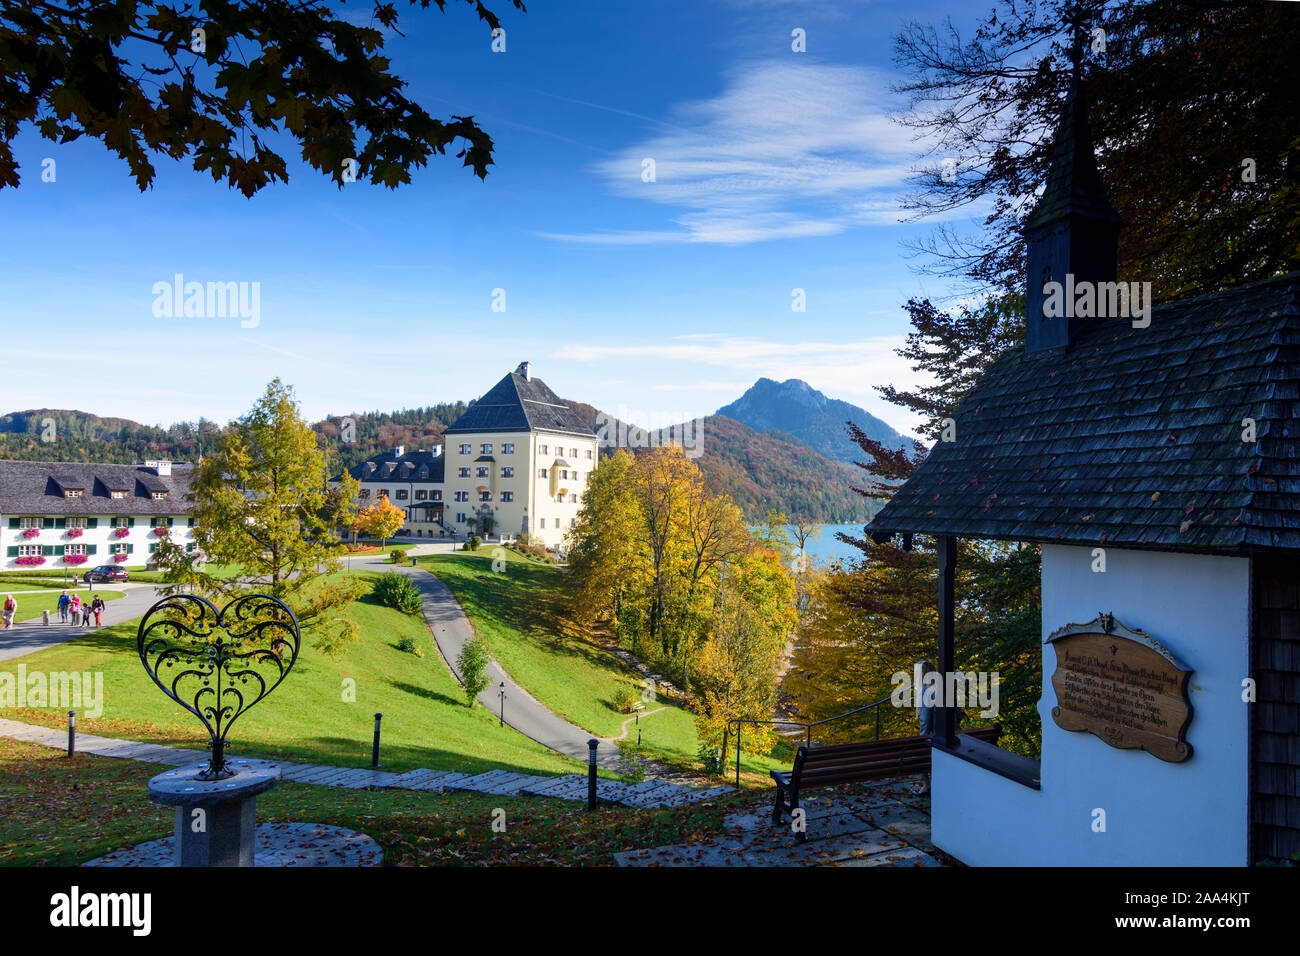 Hof bei Salzburg: castello Schloss Fuschl, lago Fuschlsee, cappella (destro) nella regione del Salzkammergut, Salisburgo, Austria Foto Stock